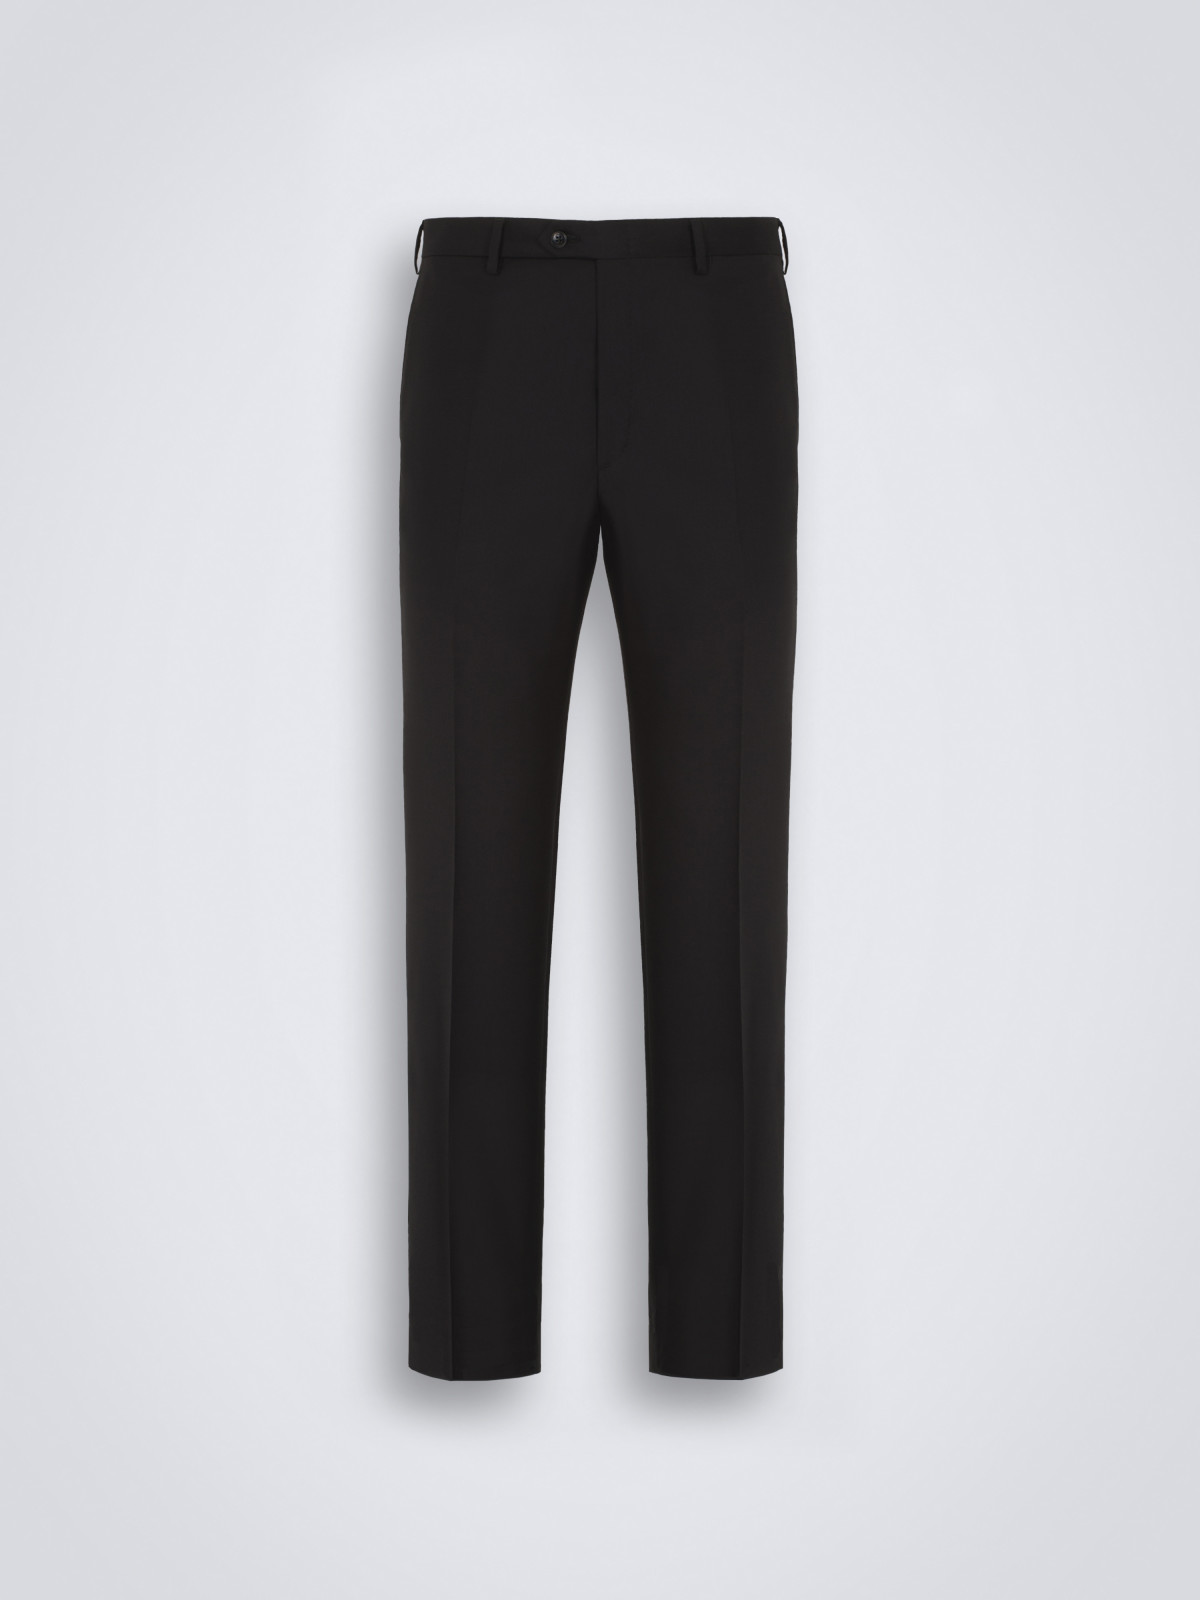 Essential black wool Tigullio trousers | Brioni® CA Official Store